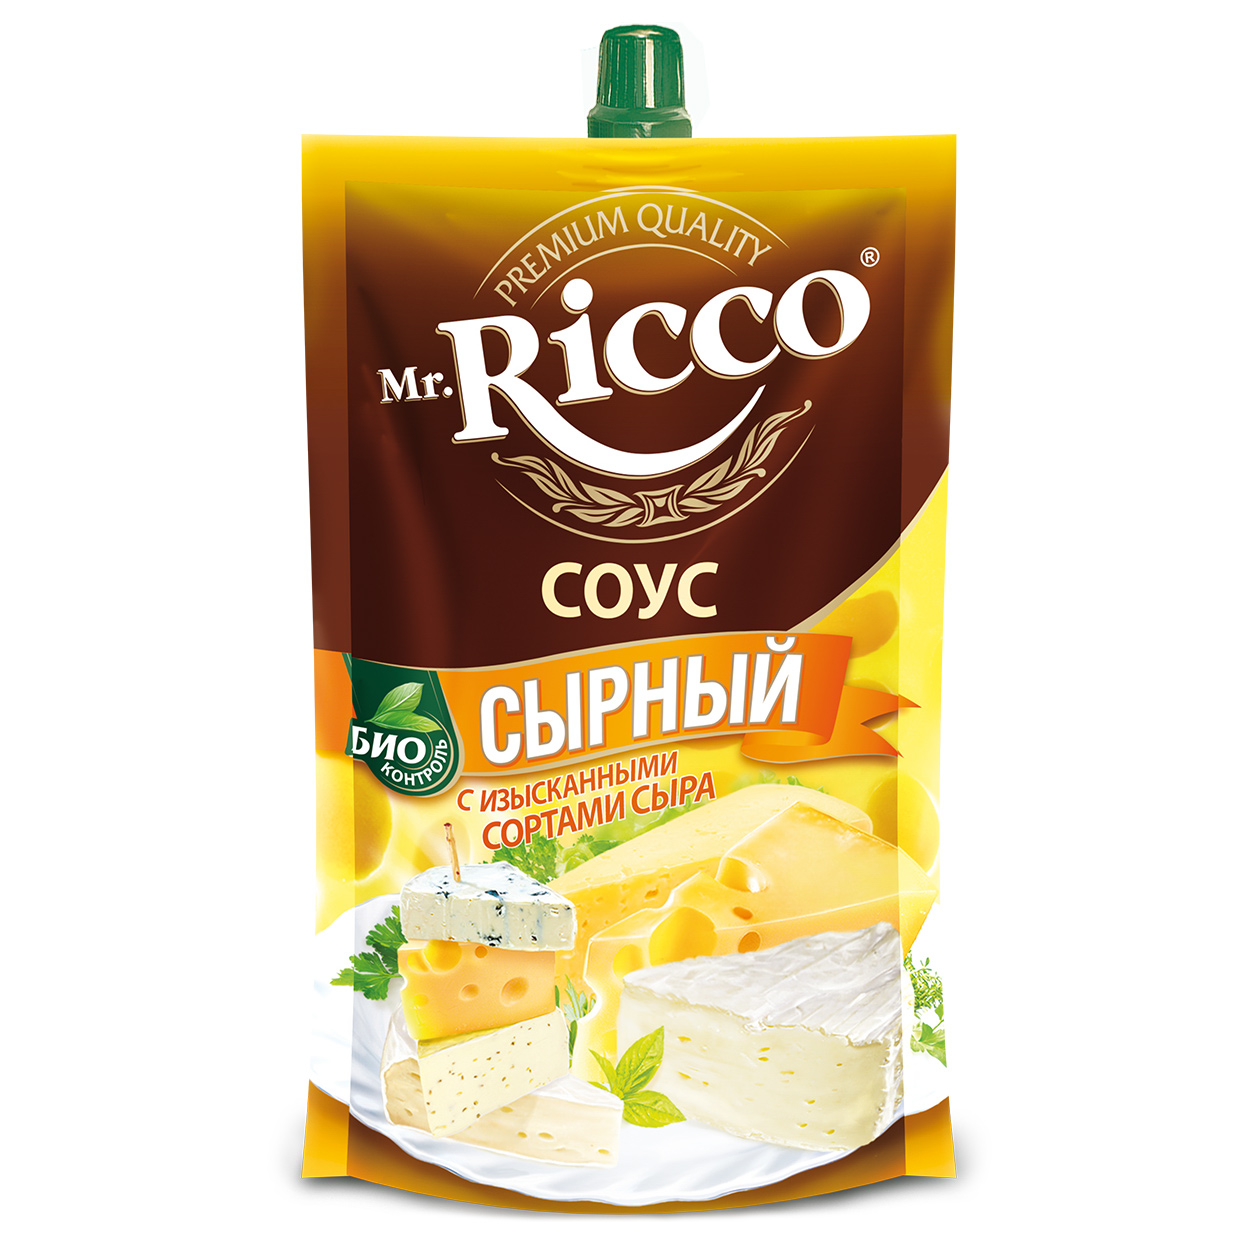 Соус Mr.Ricco Сырный 28% 210 г соус сырный mr ricco с изысканными сортами сыра 210 г